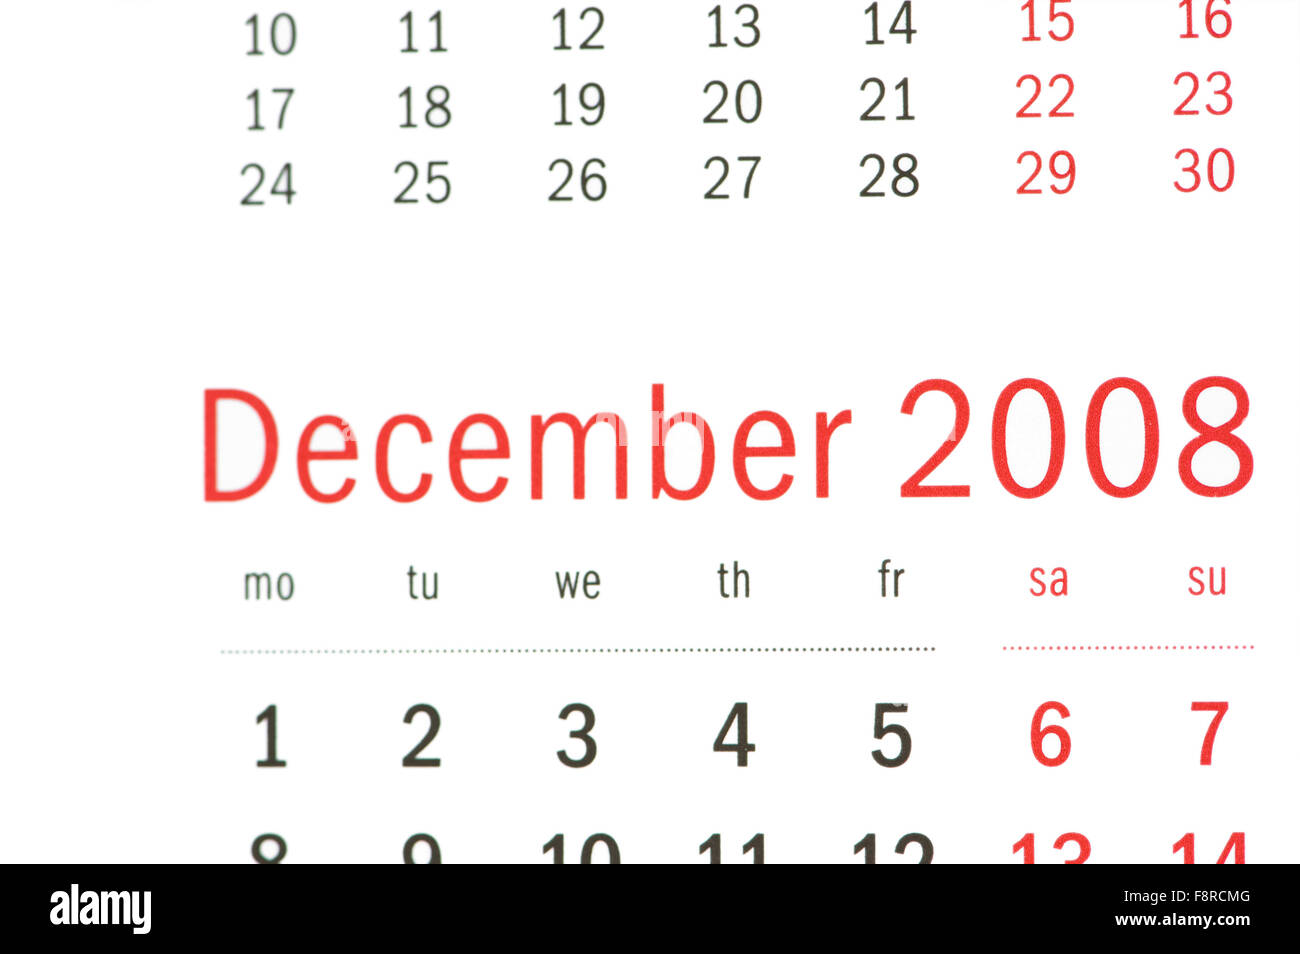 Close Up Of December 2008 From Calendar Stock Photo Alamy